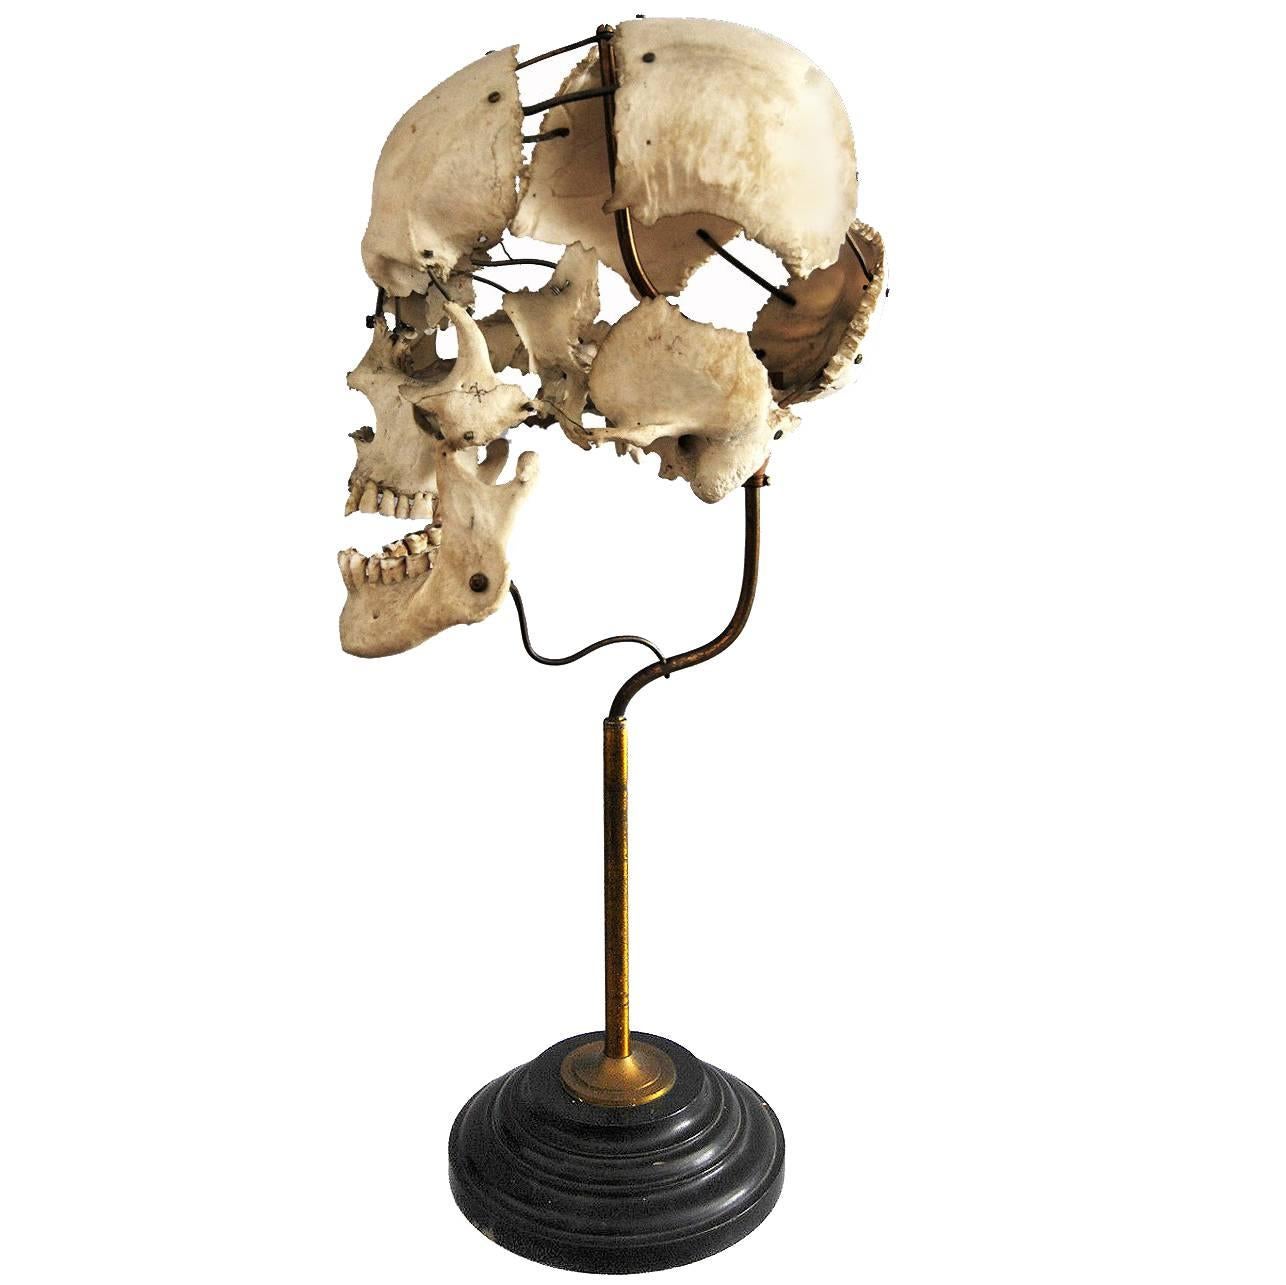 Real Beauchene Skull, Early Medical School Teaching Display